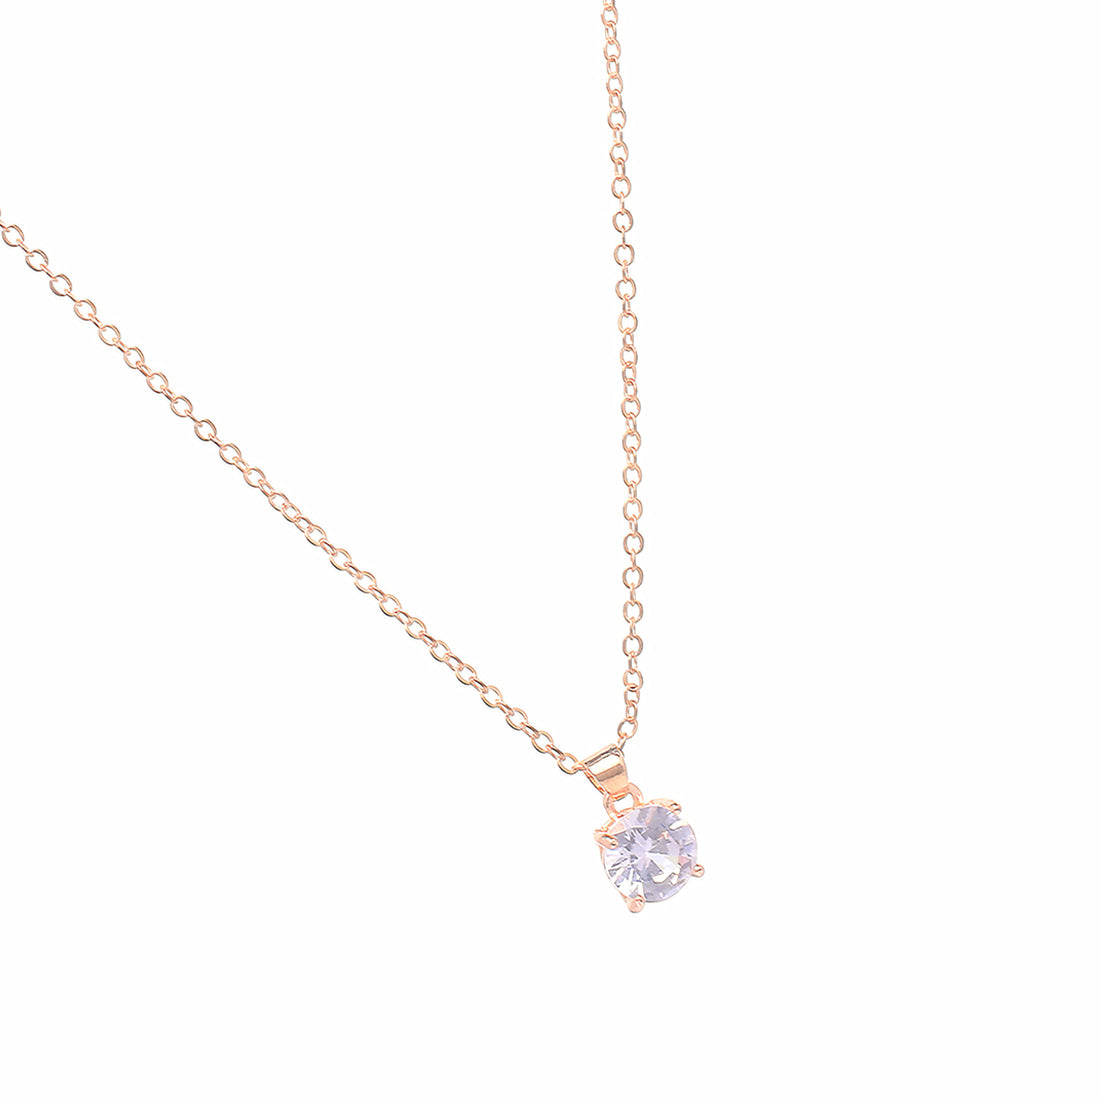 Elegant Rosegold Chain With A Dazzling Diamonti Pendant. Mimics Real Diamond Intricacy